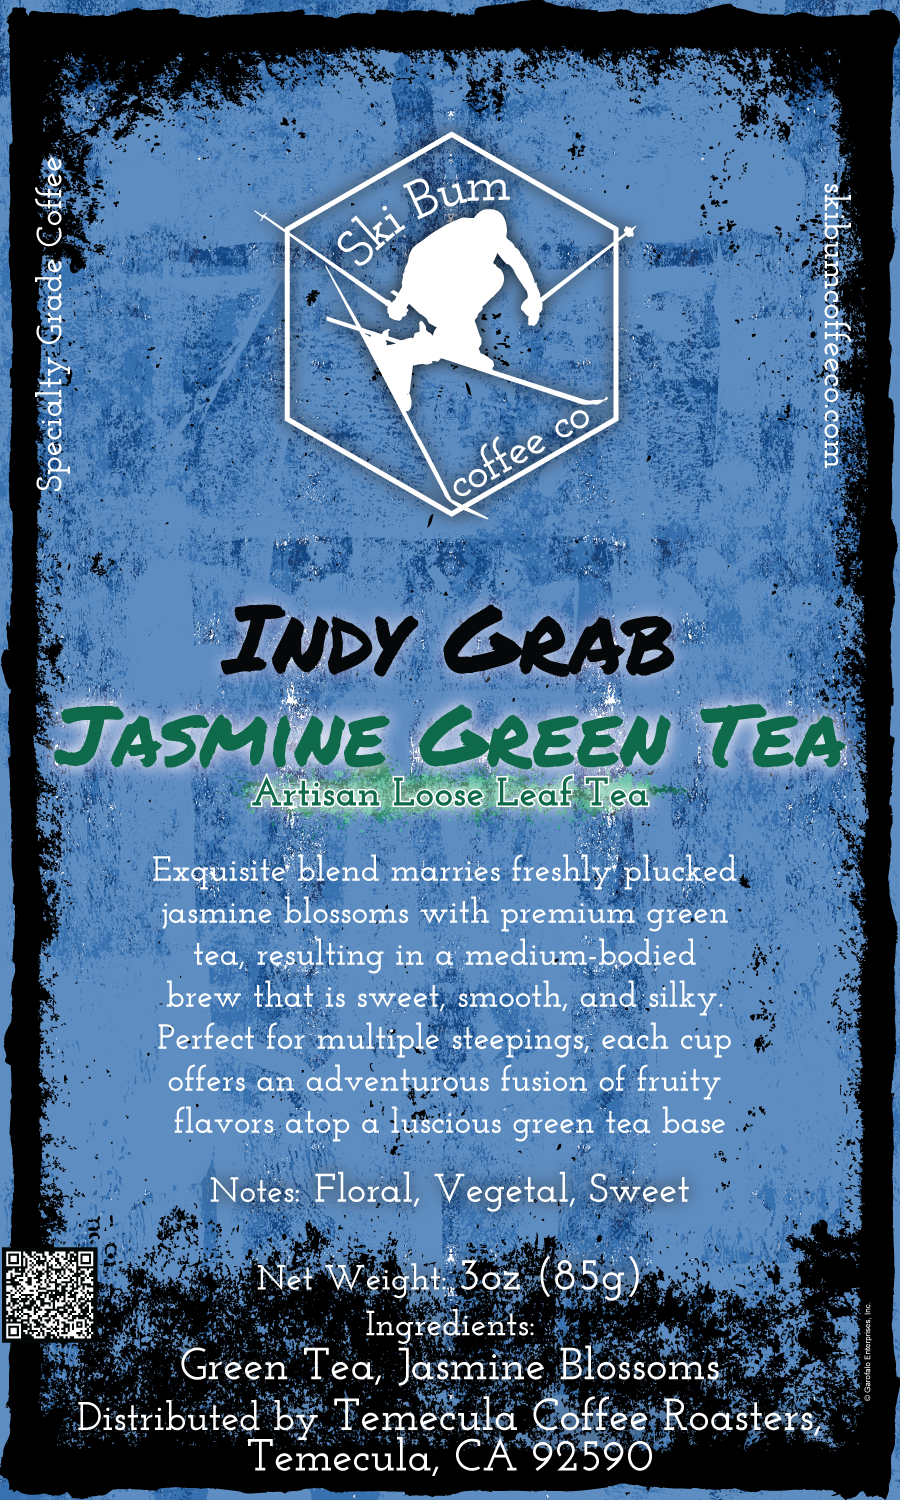 Indy Grab Jasmine Green Tea